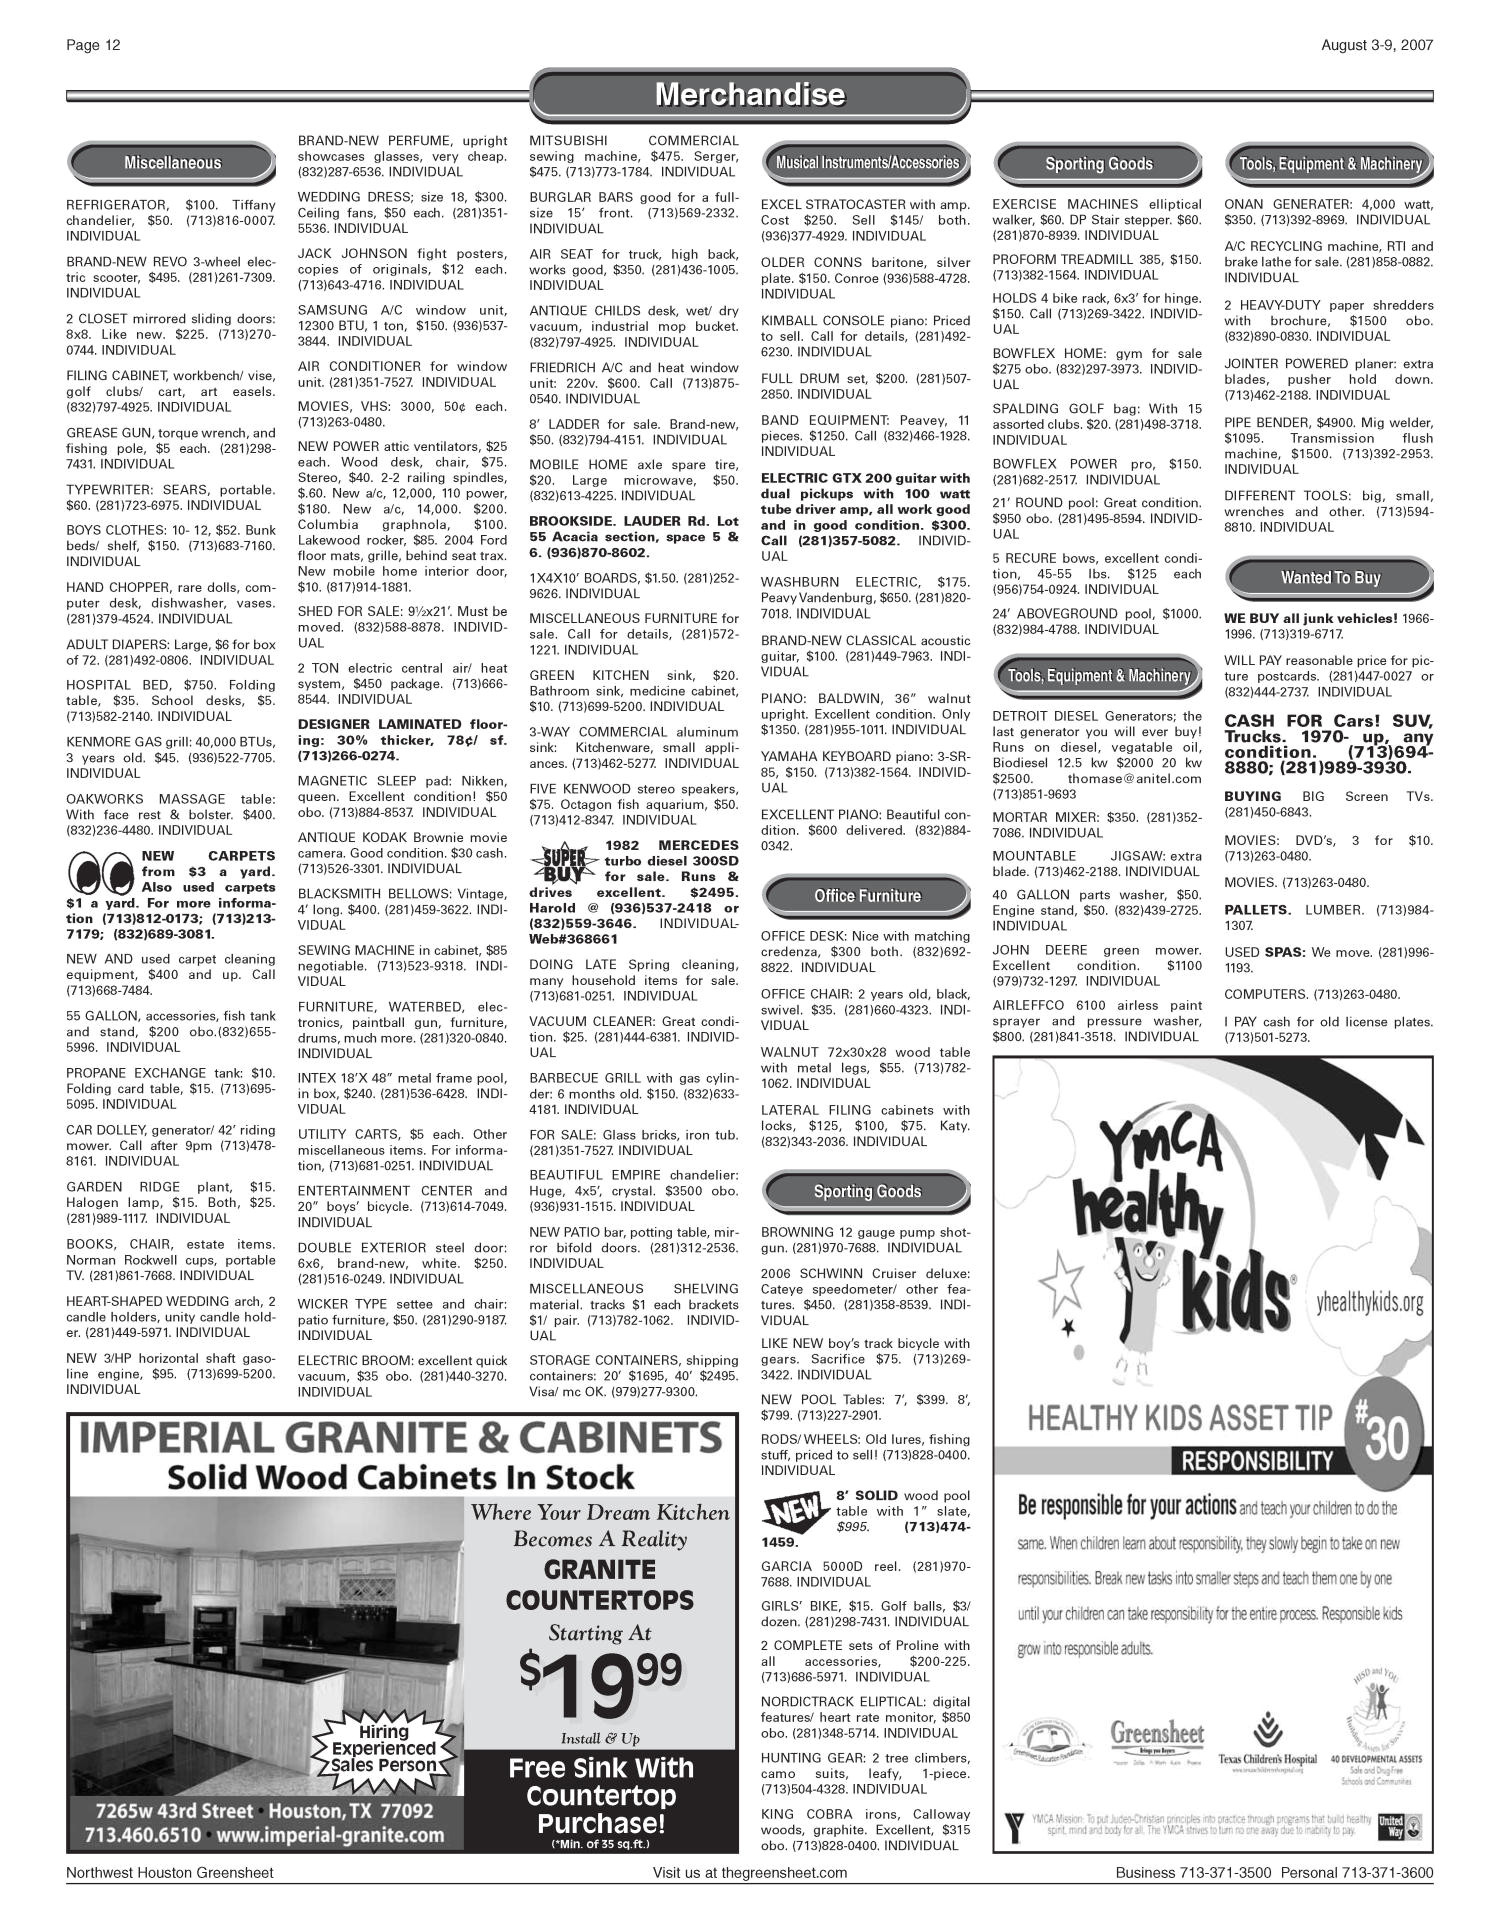 greensheet houston tex vol 38 no 311 ed 1 friday august 3 2007 page 12 of 56 the portal to texas history